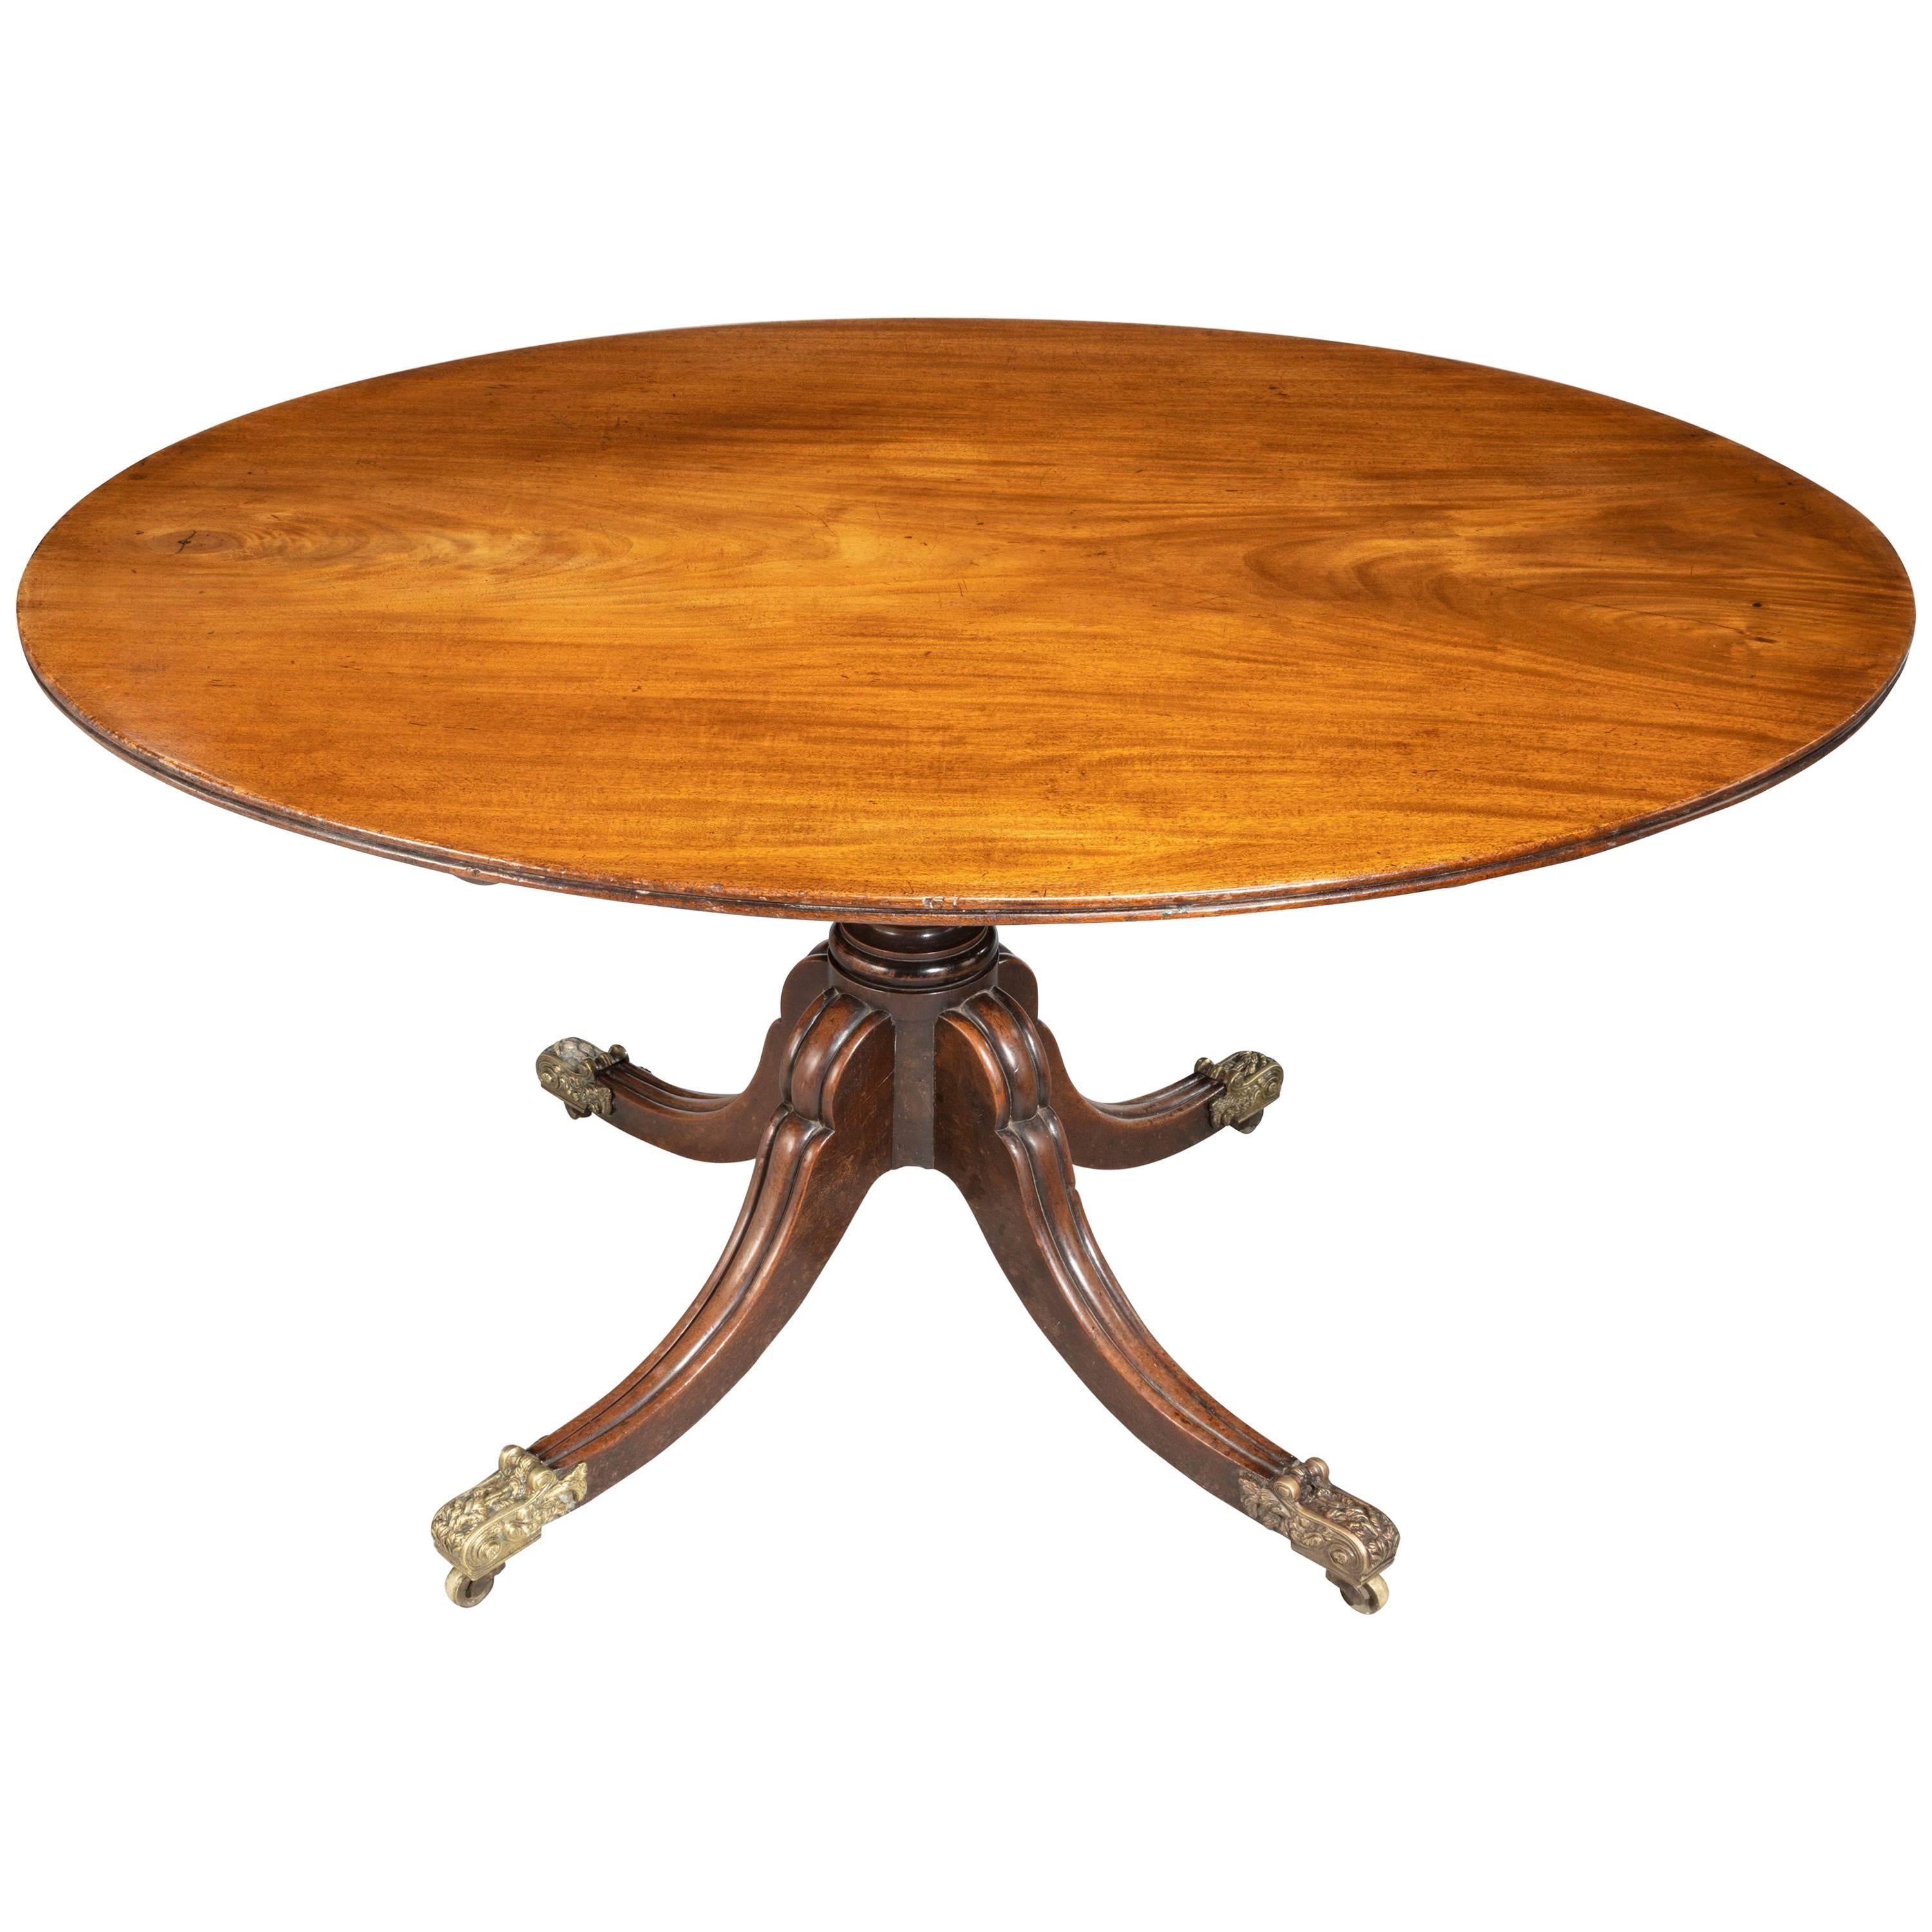 George III Period Oval Mahogany Dinning Room Table